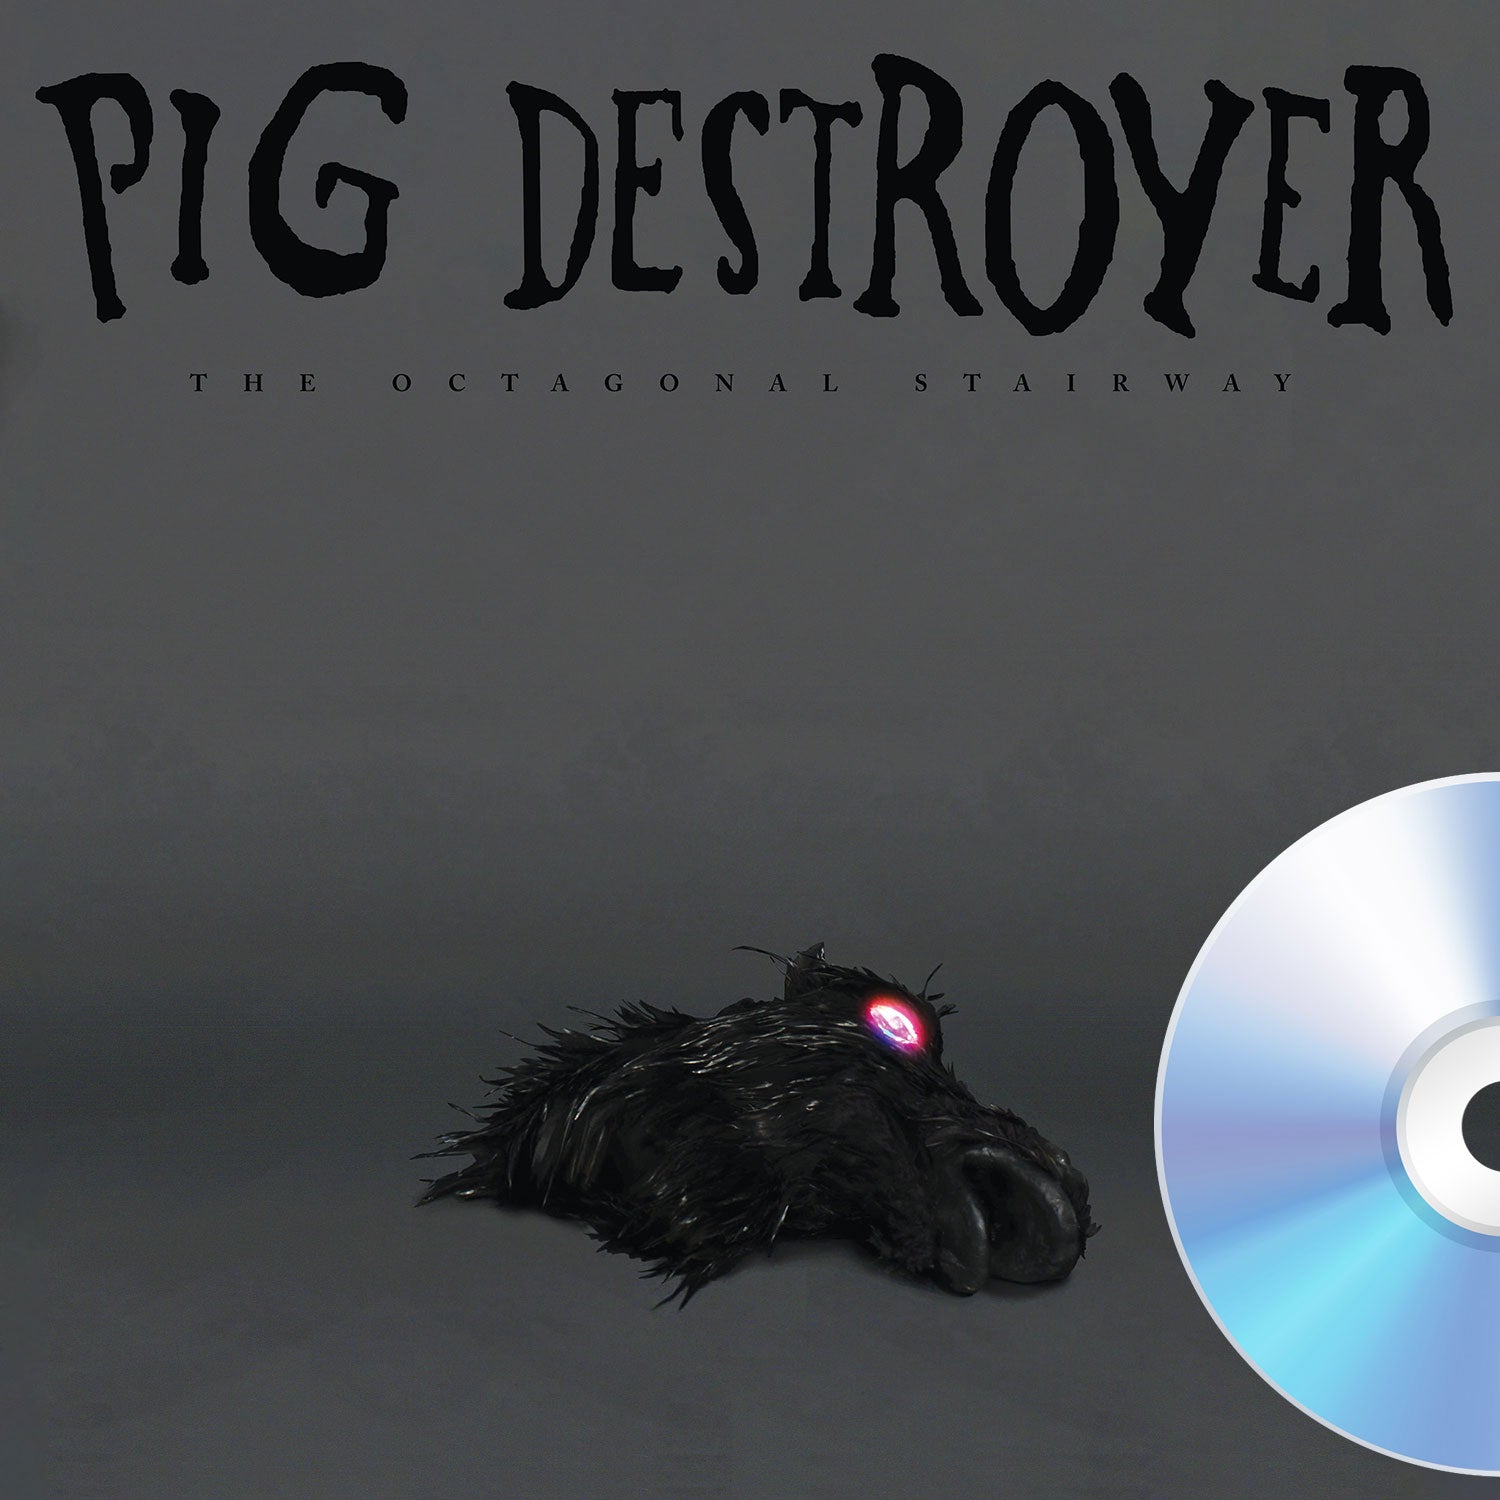 Pig Destroyer "The Octagonal Stairway" CD